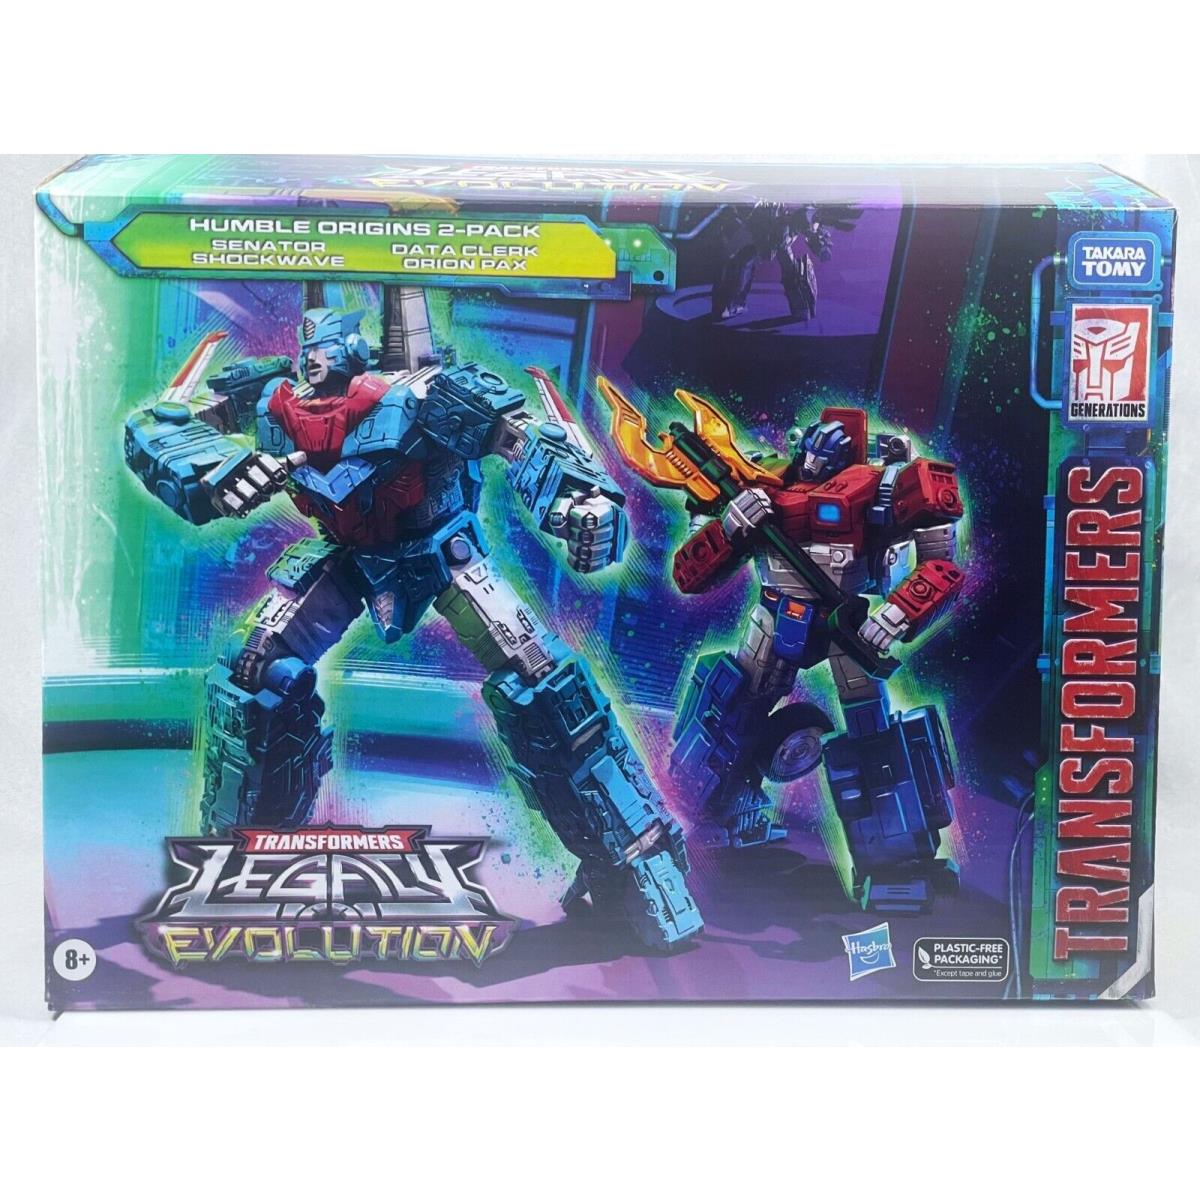 Transformers Legacy Evolution Humble Origins Senator Shockwave Orion Pax Misb